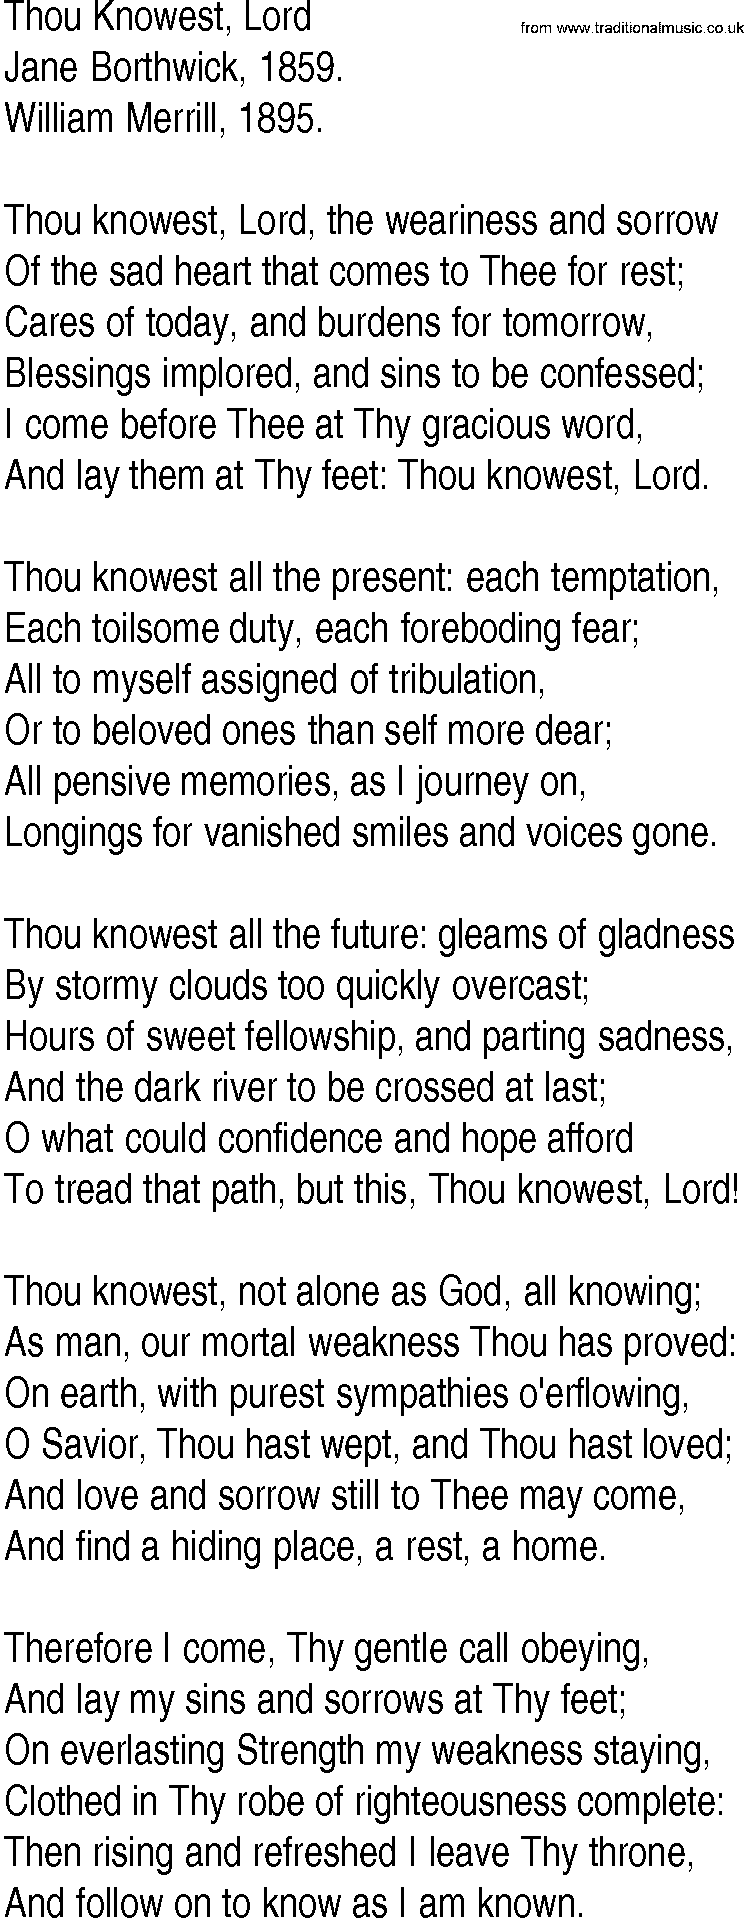 Hymn and Gospel Song: Thou Knowest, Lord by Jane Borthwick lyrics